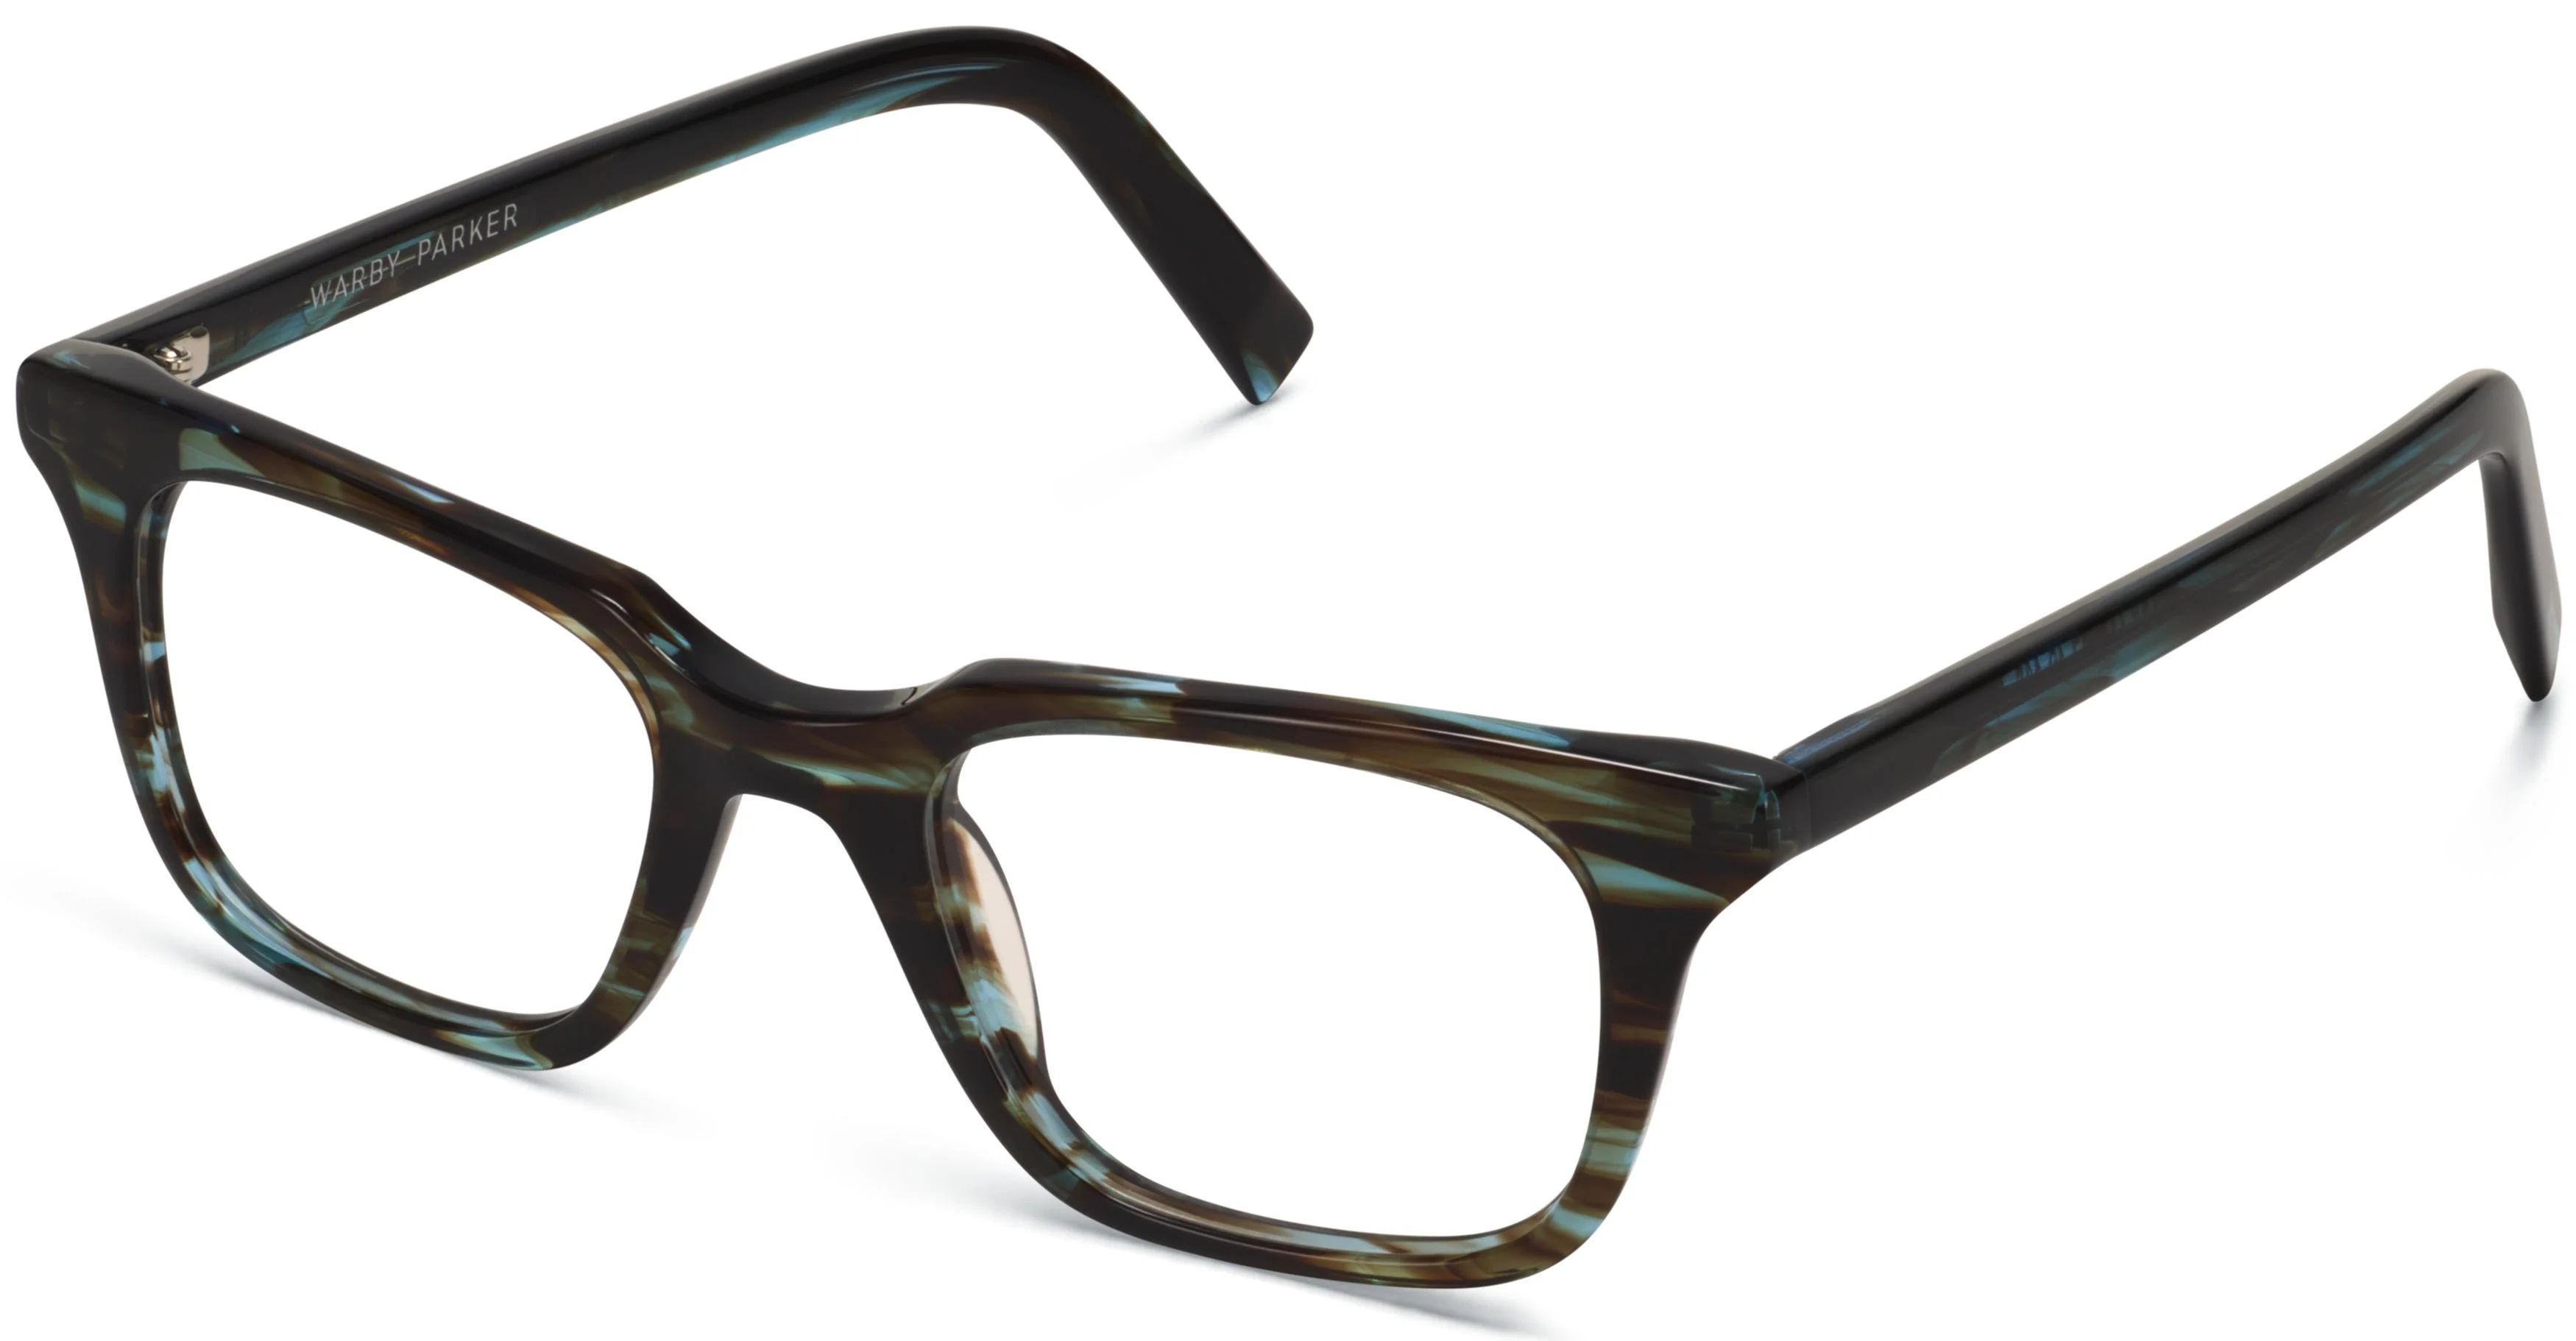 Clark Eyeglasses in Blue Marblewood | Warby Parker | Warby Parker (US)